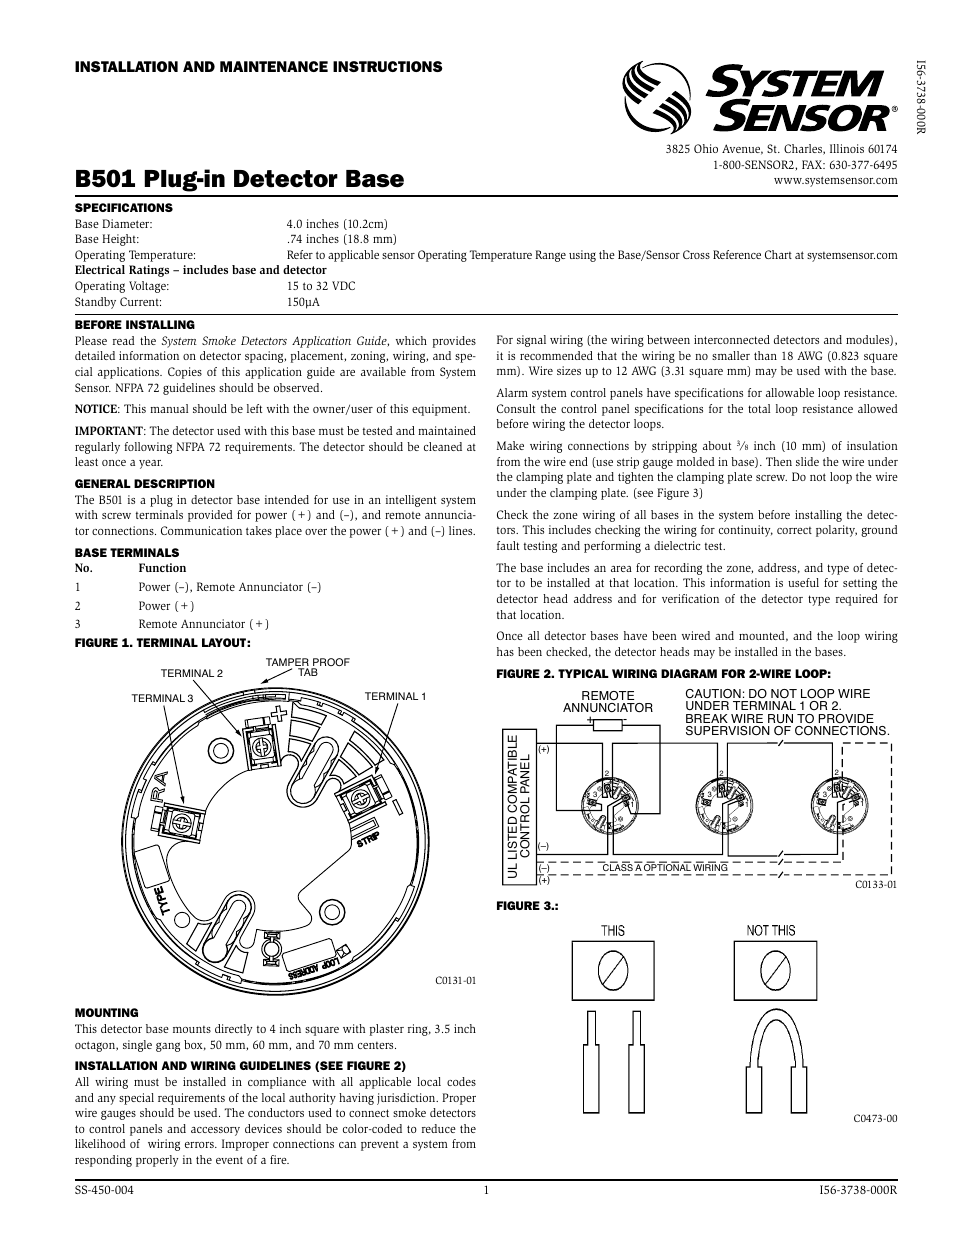 System Sensor B501 User Manual | 2 pages